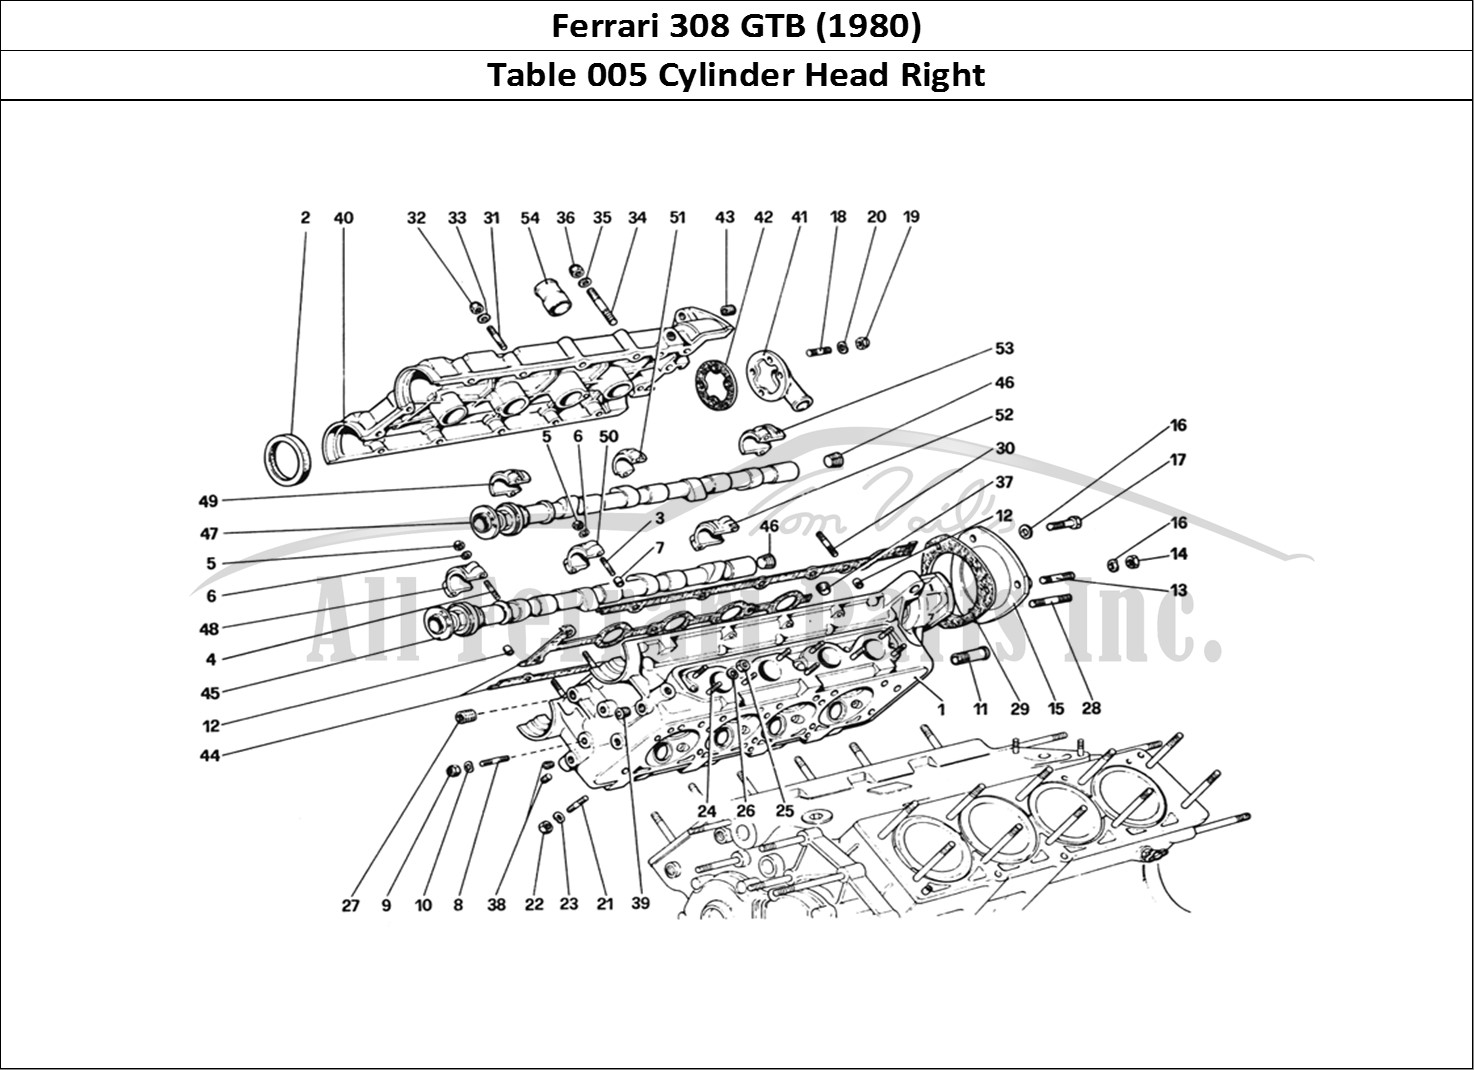 Ferrari Parts Ferrari 308 GTB (1980) Page 005 Cylinder Head (Right)